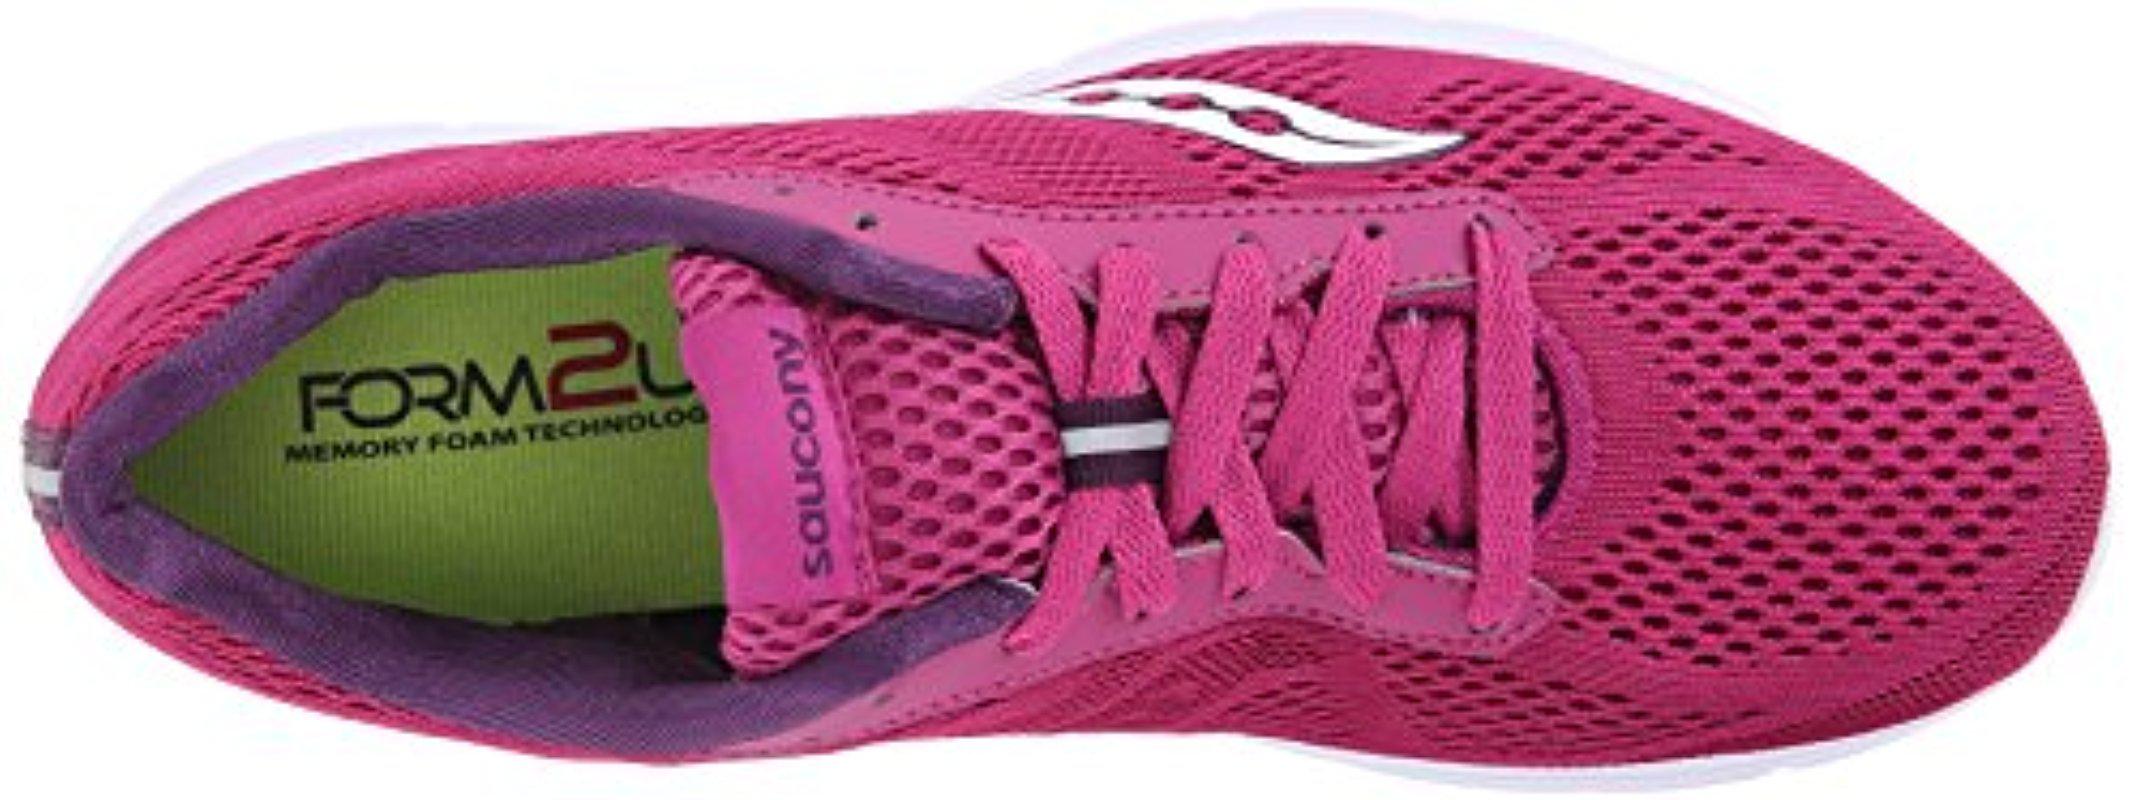 saucony women's grid ideal running shoe